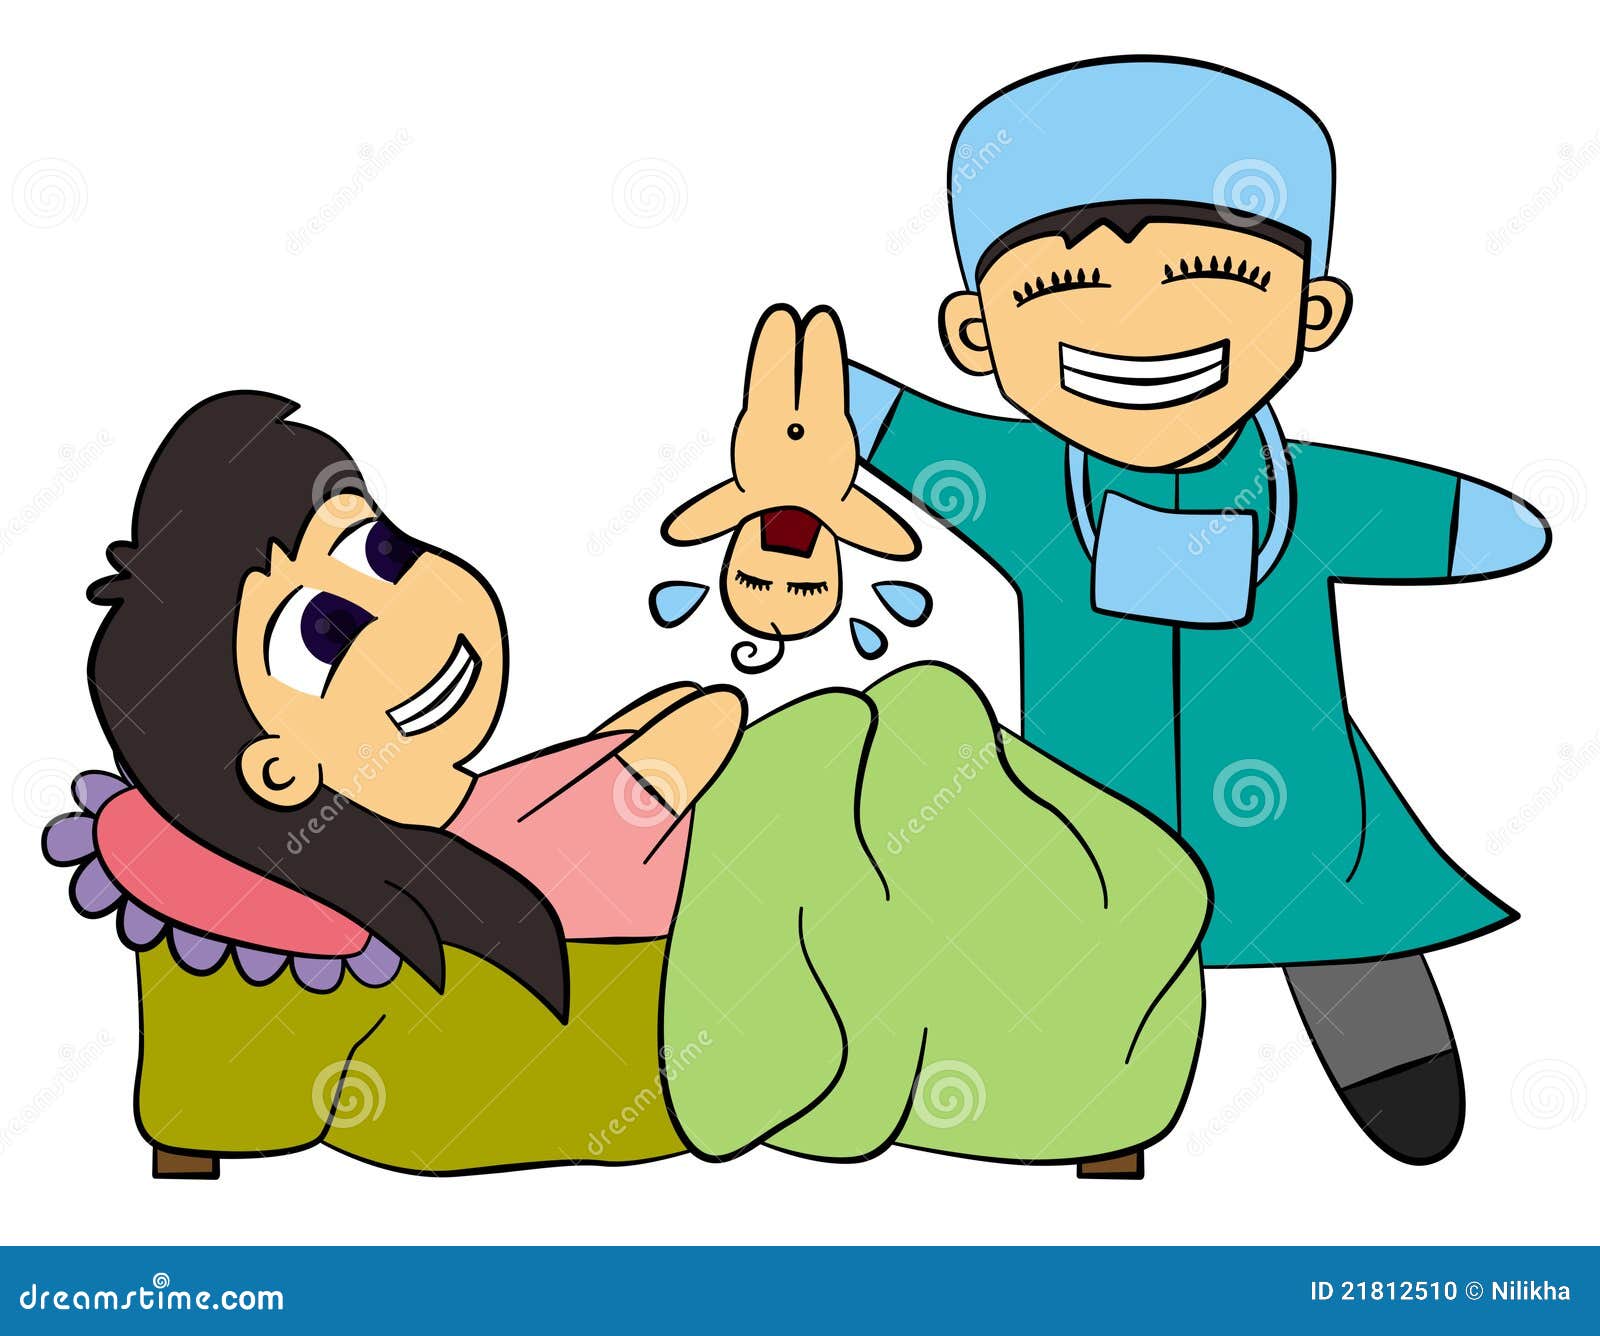 Giving birth stock illustration. Illustration of life - 21812510